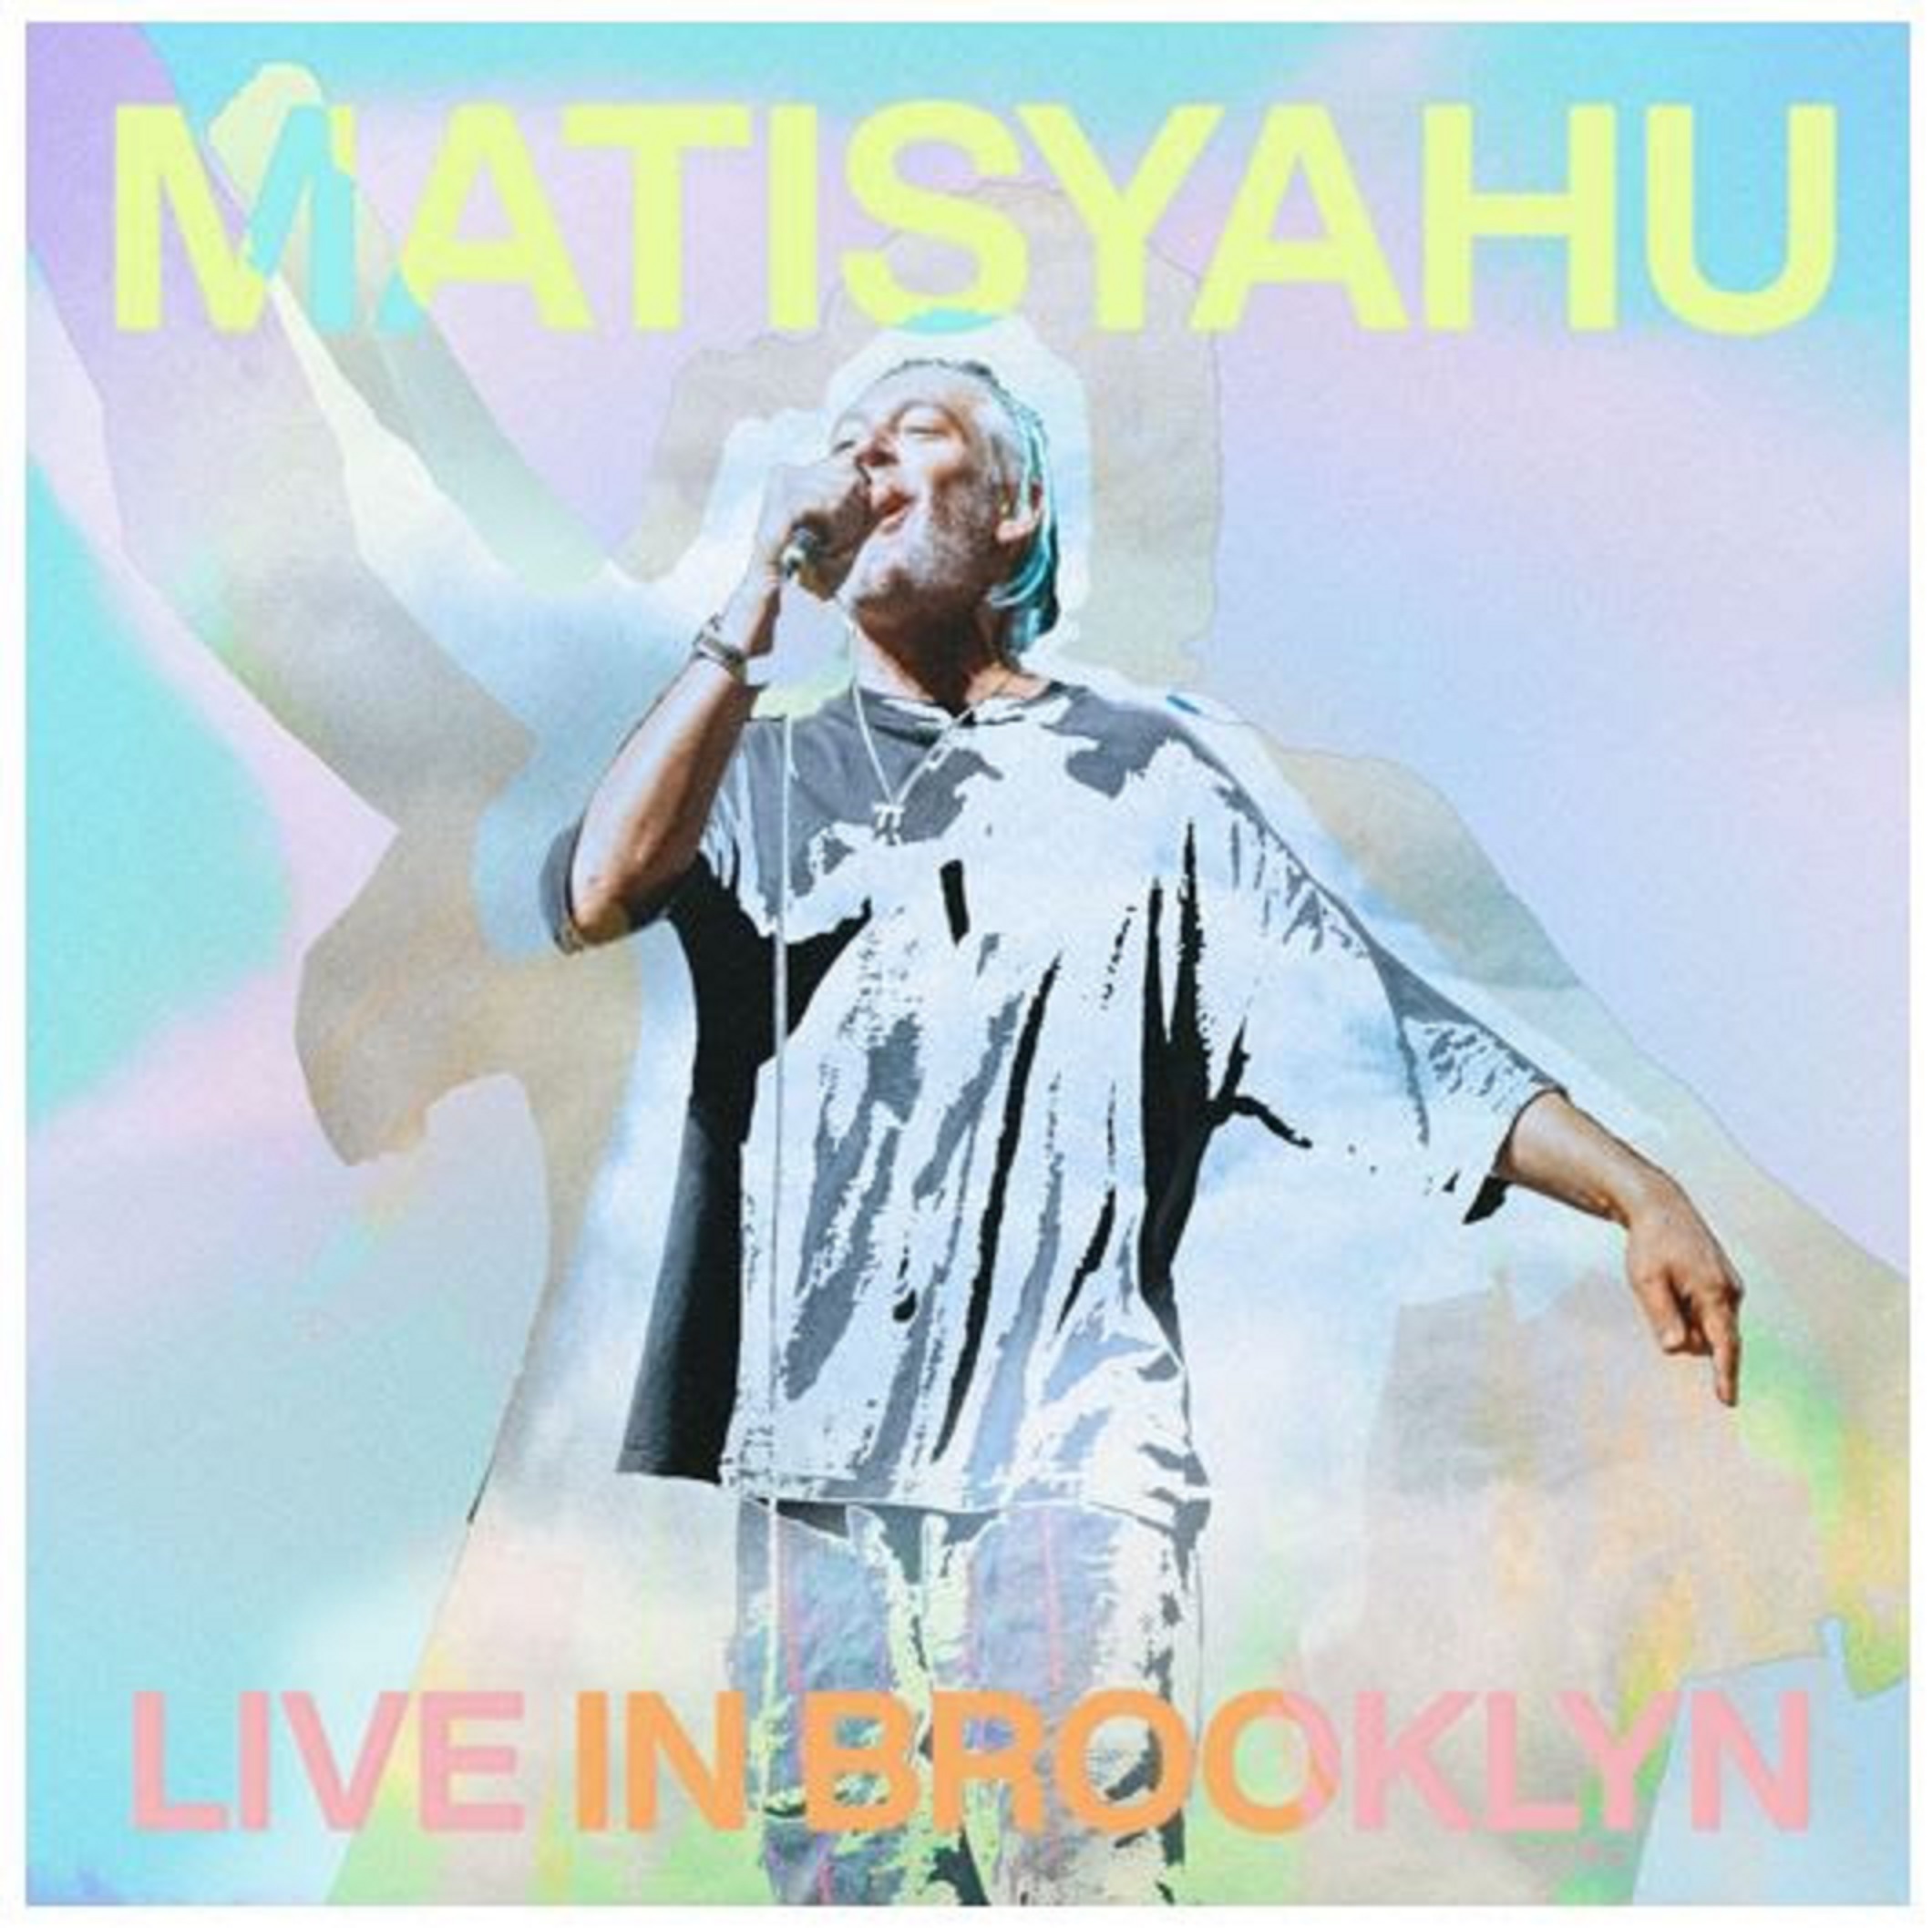 Matisyahu Releases 'Live In Brooklyn' Album | Listen Now